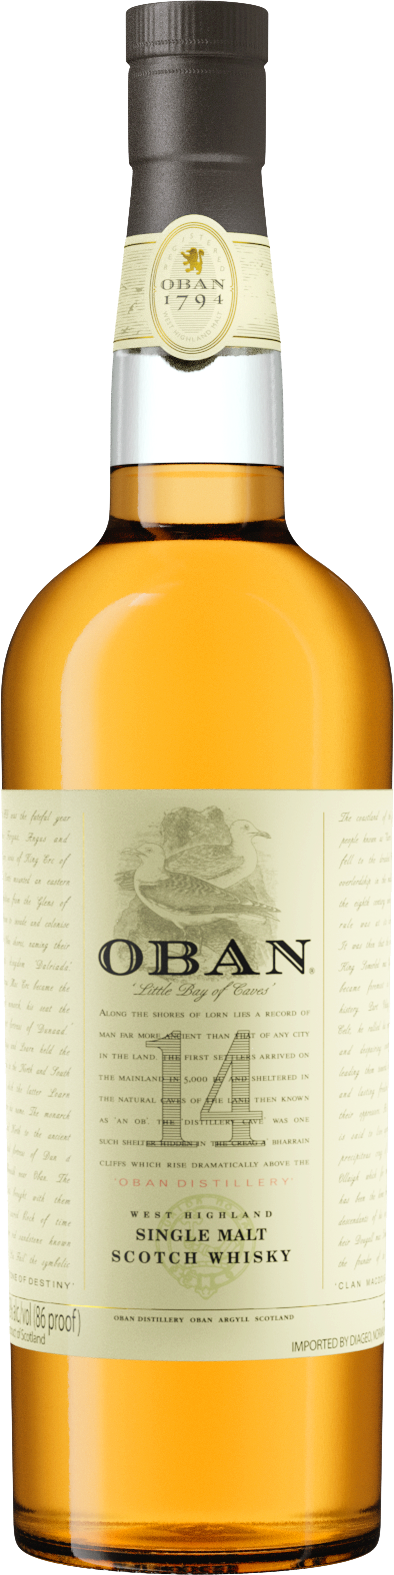 Oban Single Malt 14 Year Old Single Malt Scotch Whisky, 750ml